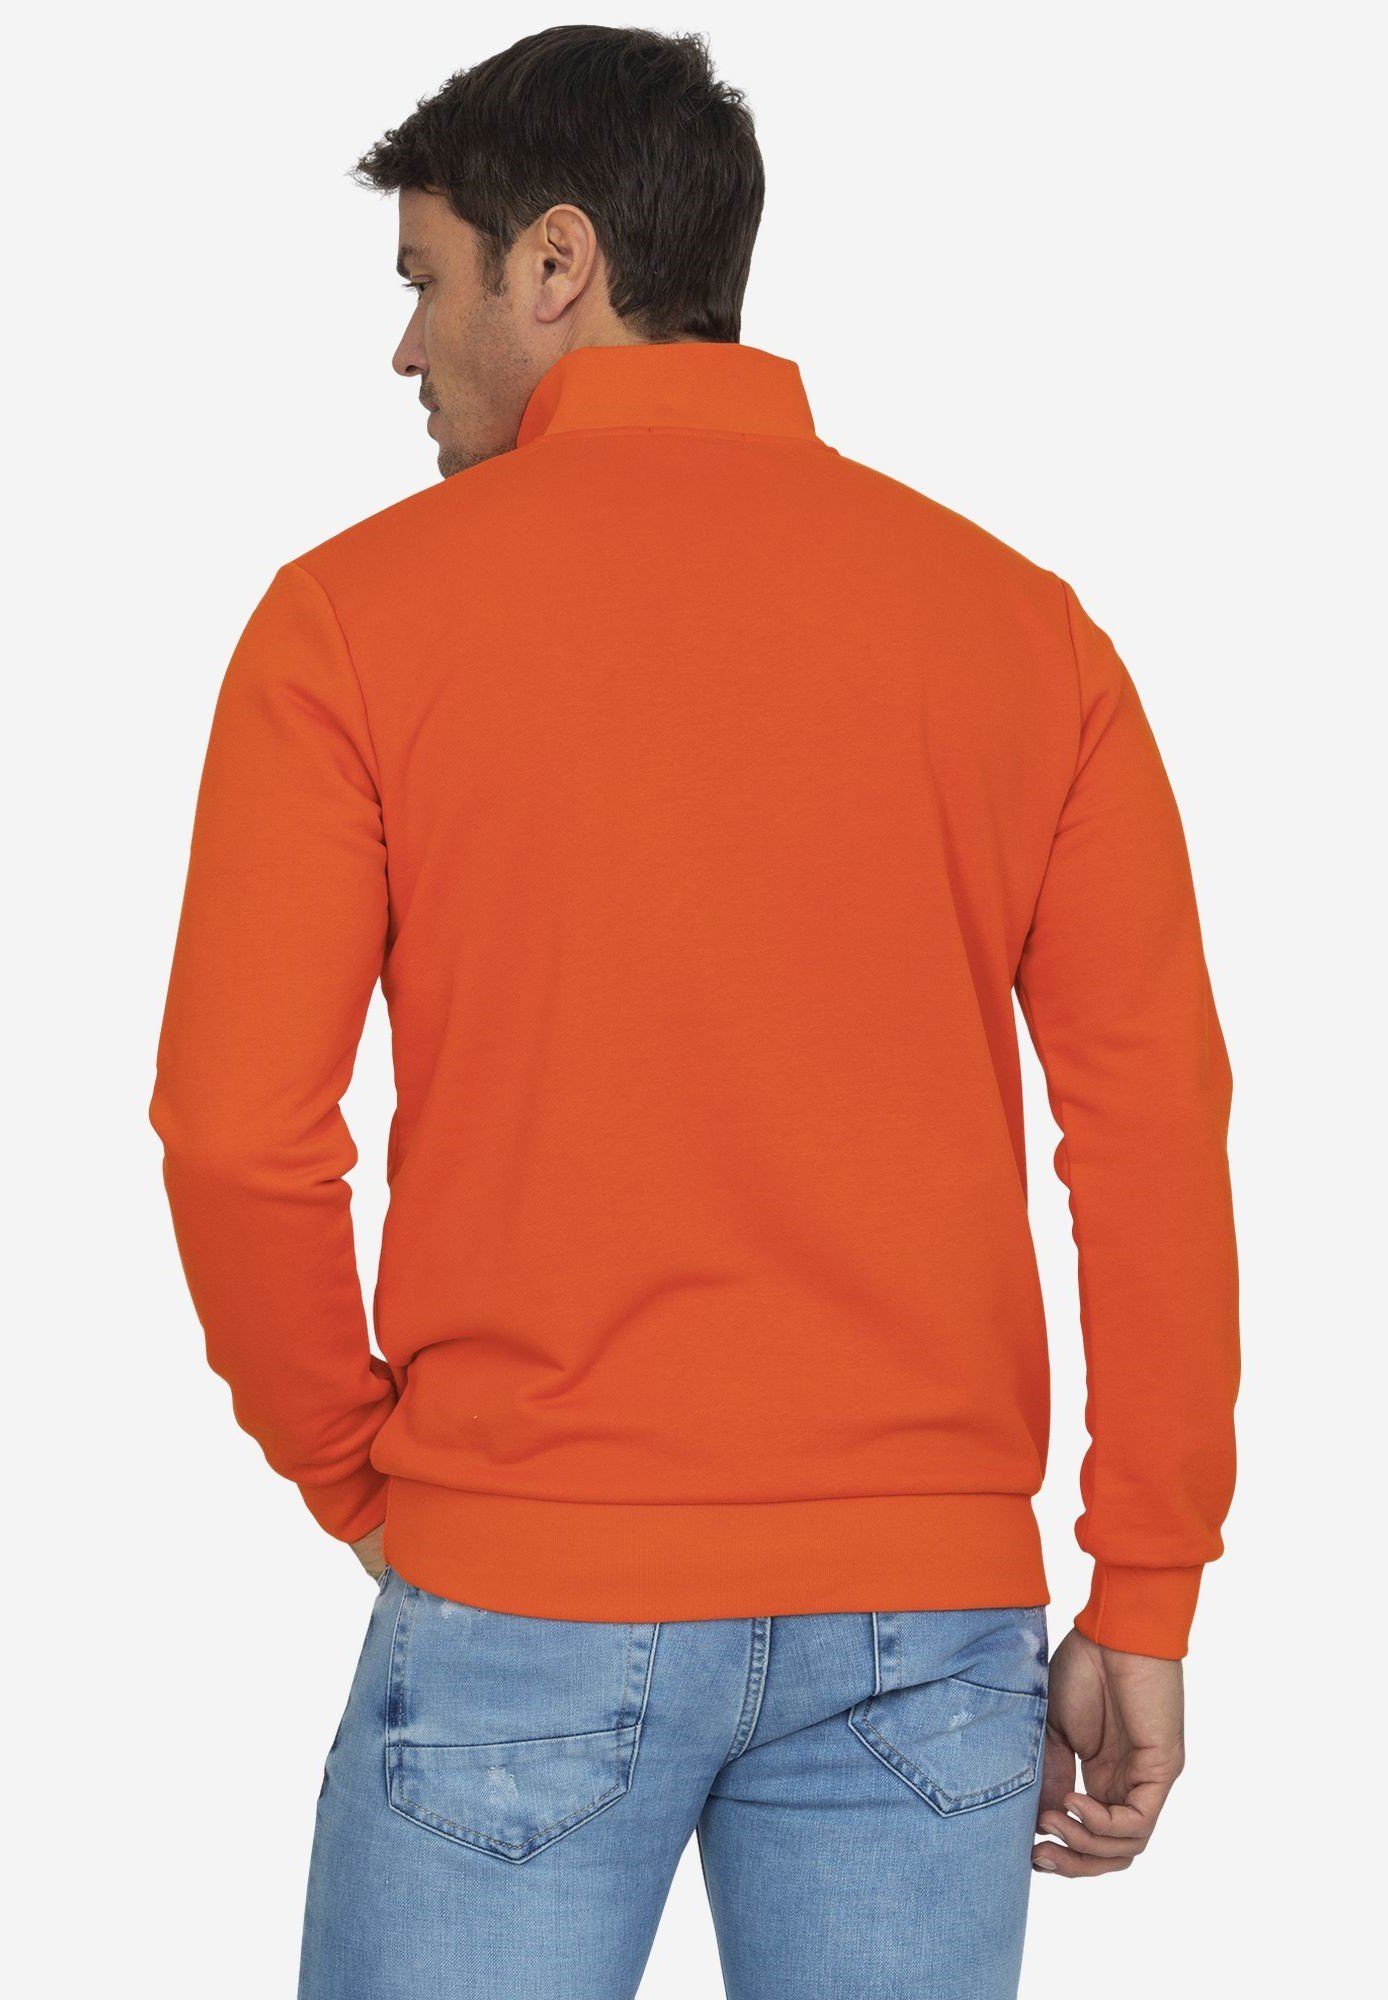 Sir Raymond Tailor Orange Sweatshirt Hanico